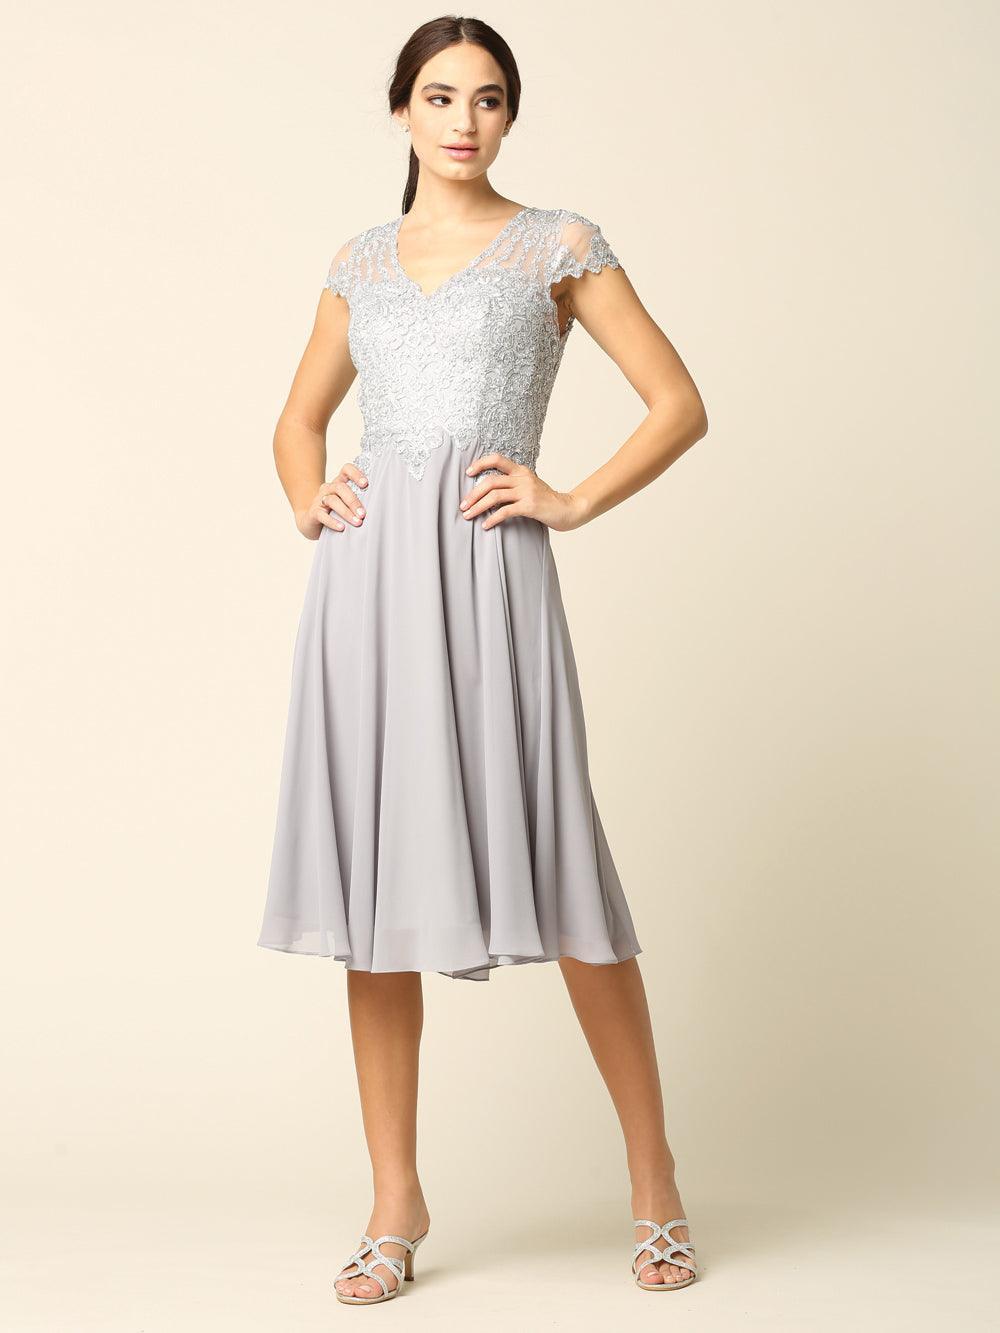 Short Dress Modest Formal Cap Sleeve Sale - The Dress Outlet